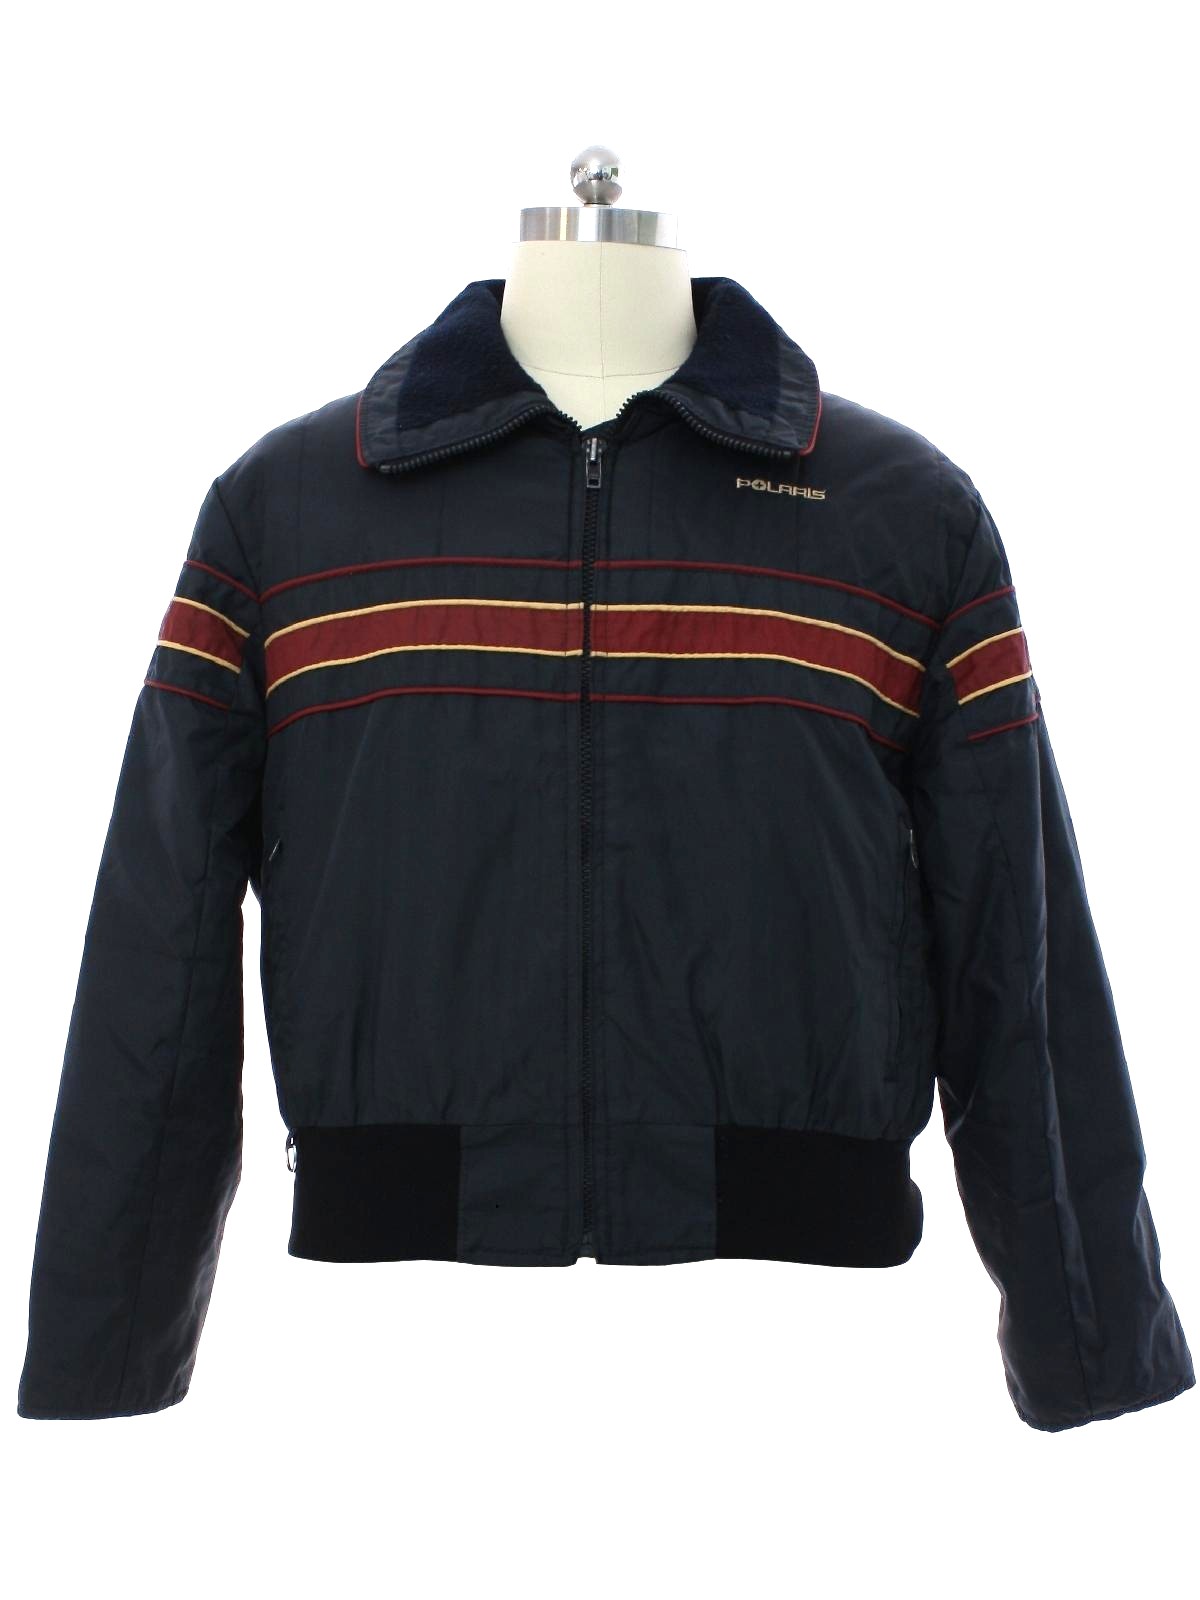 Vintage 80s Jacket: 80s -Polaris Union Made- Mens black background nylon longsleeve zip front